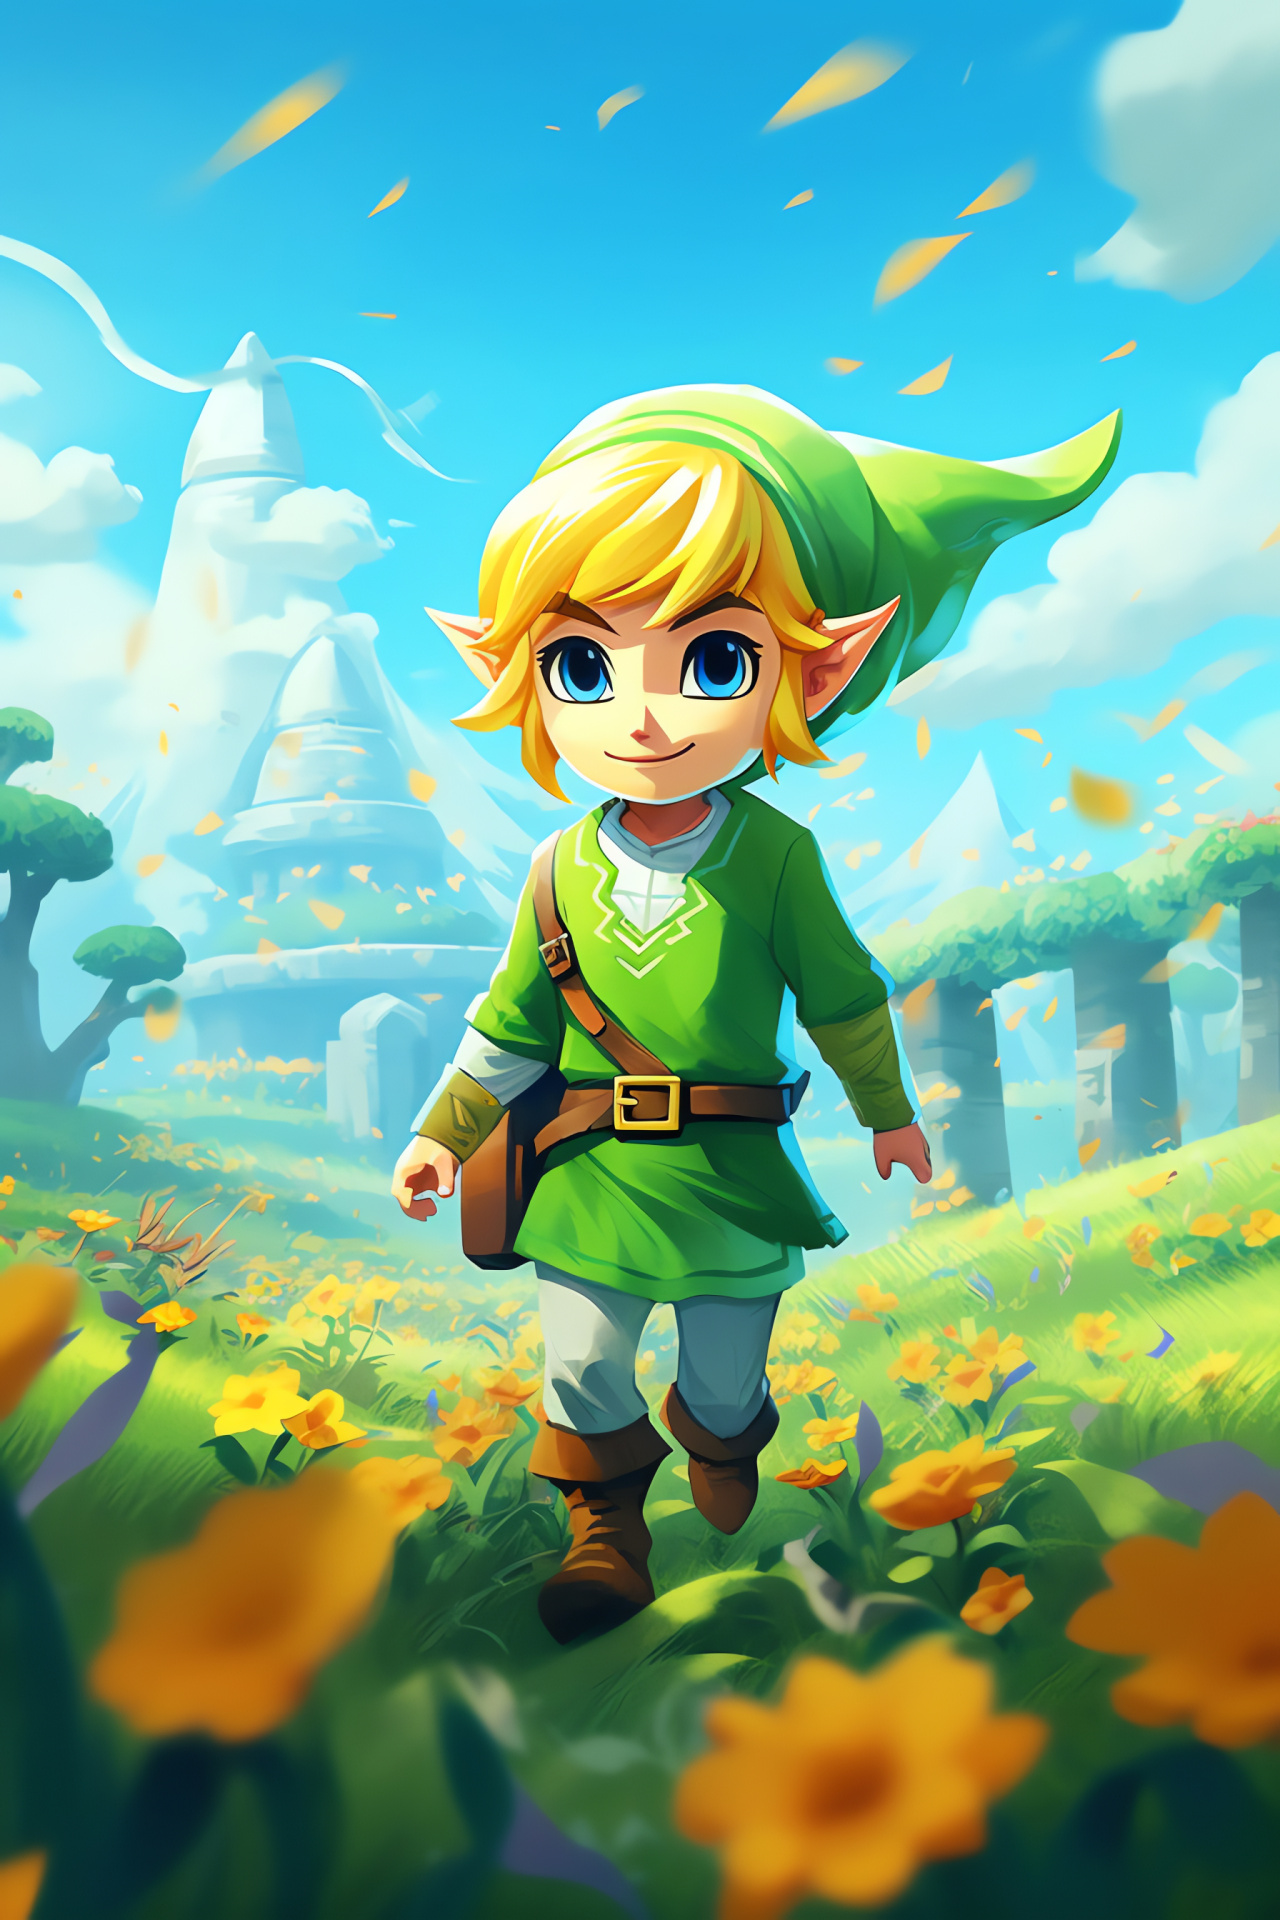 Toon Link warrior, Hero's Clothes, Zelda universe mythos, Hylian shield usage, Green-clad adventurer, HD Phone Image